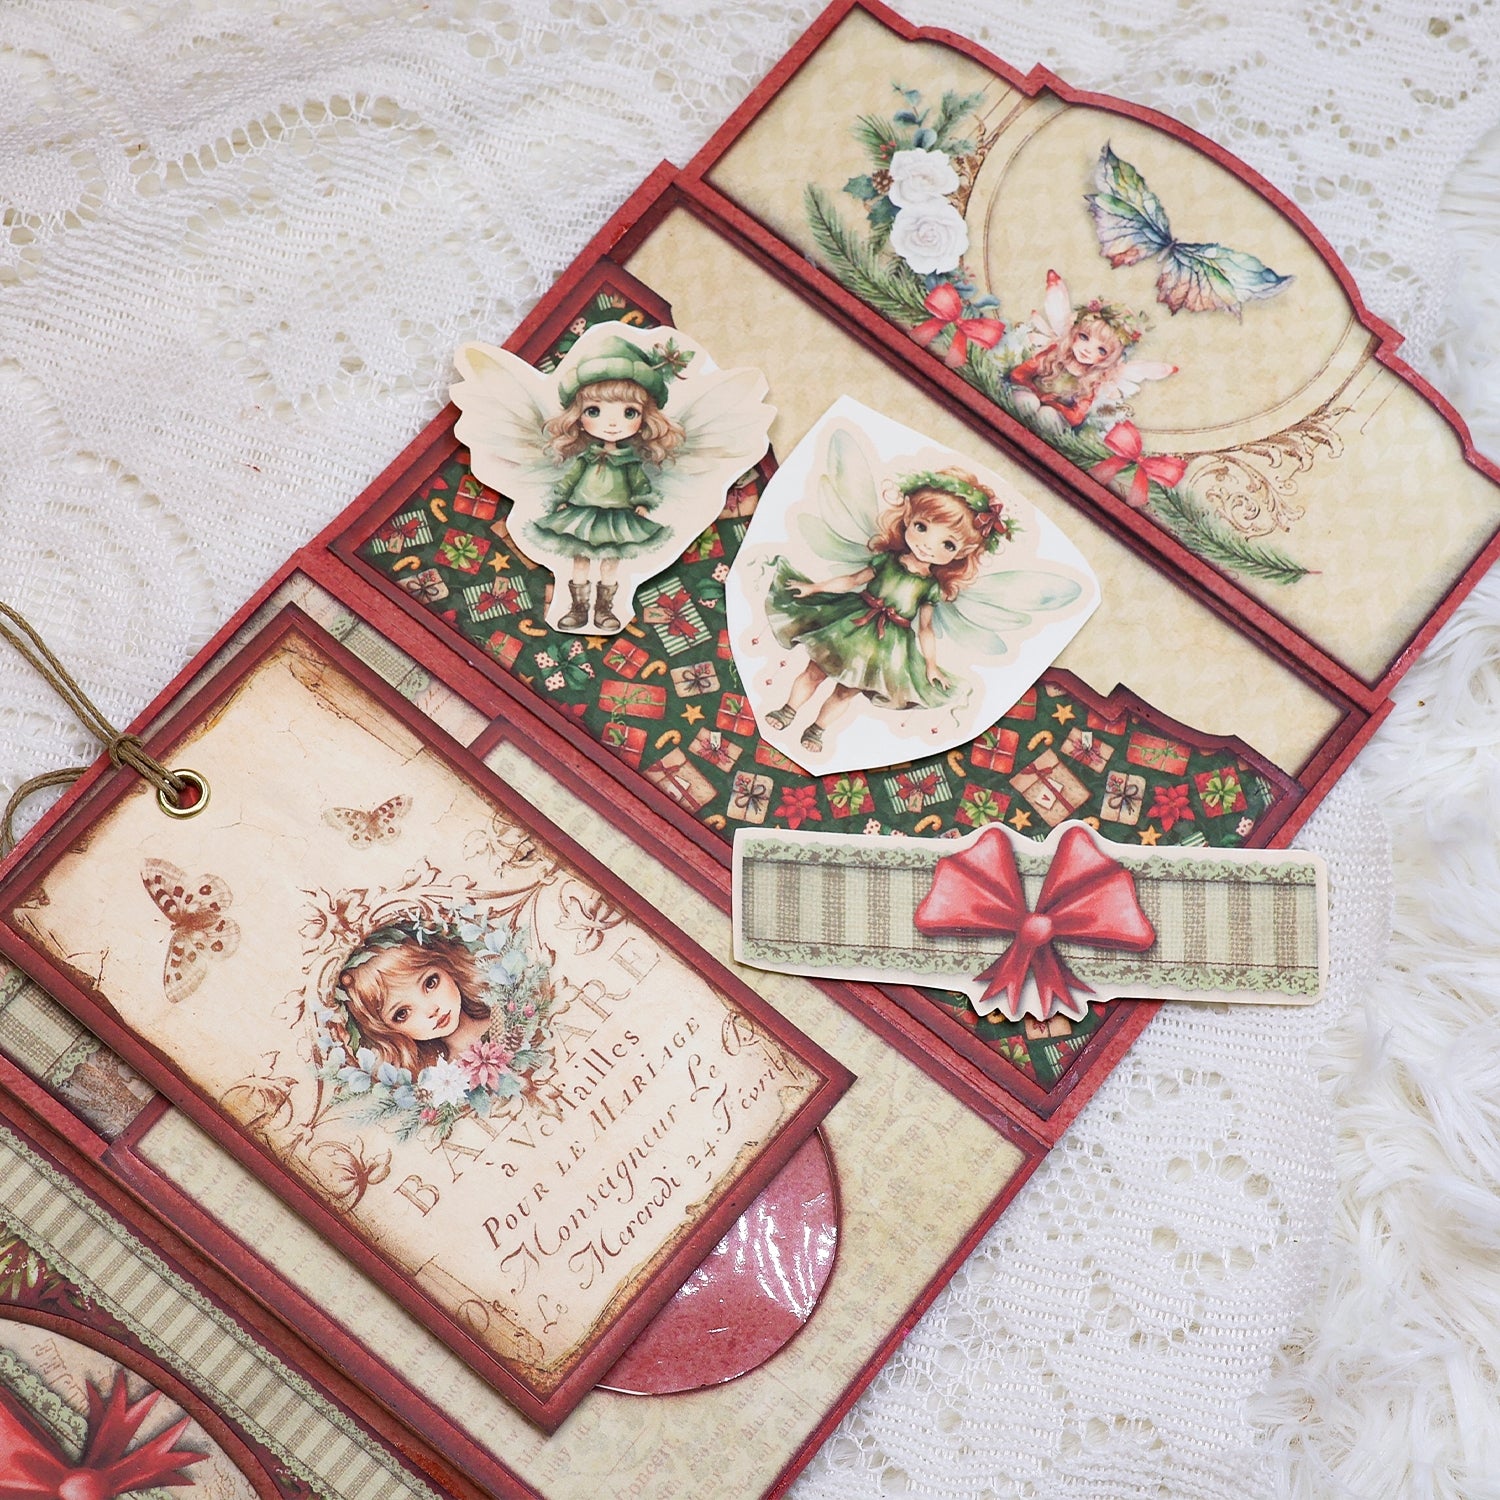 Christmas Fairies Mini Album Handmade Booklet Craft Kit 6